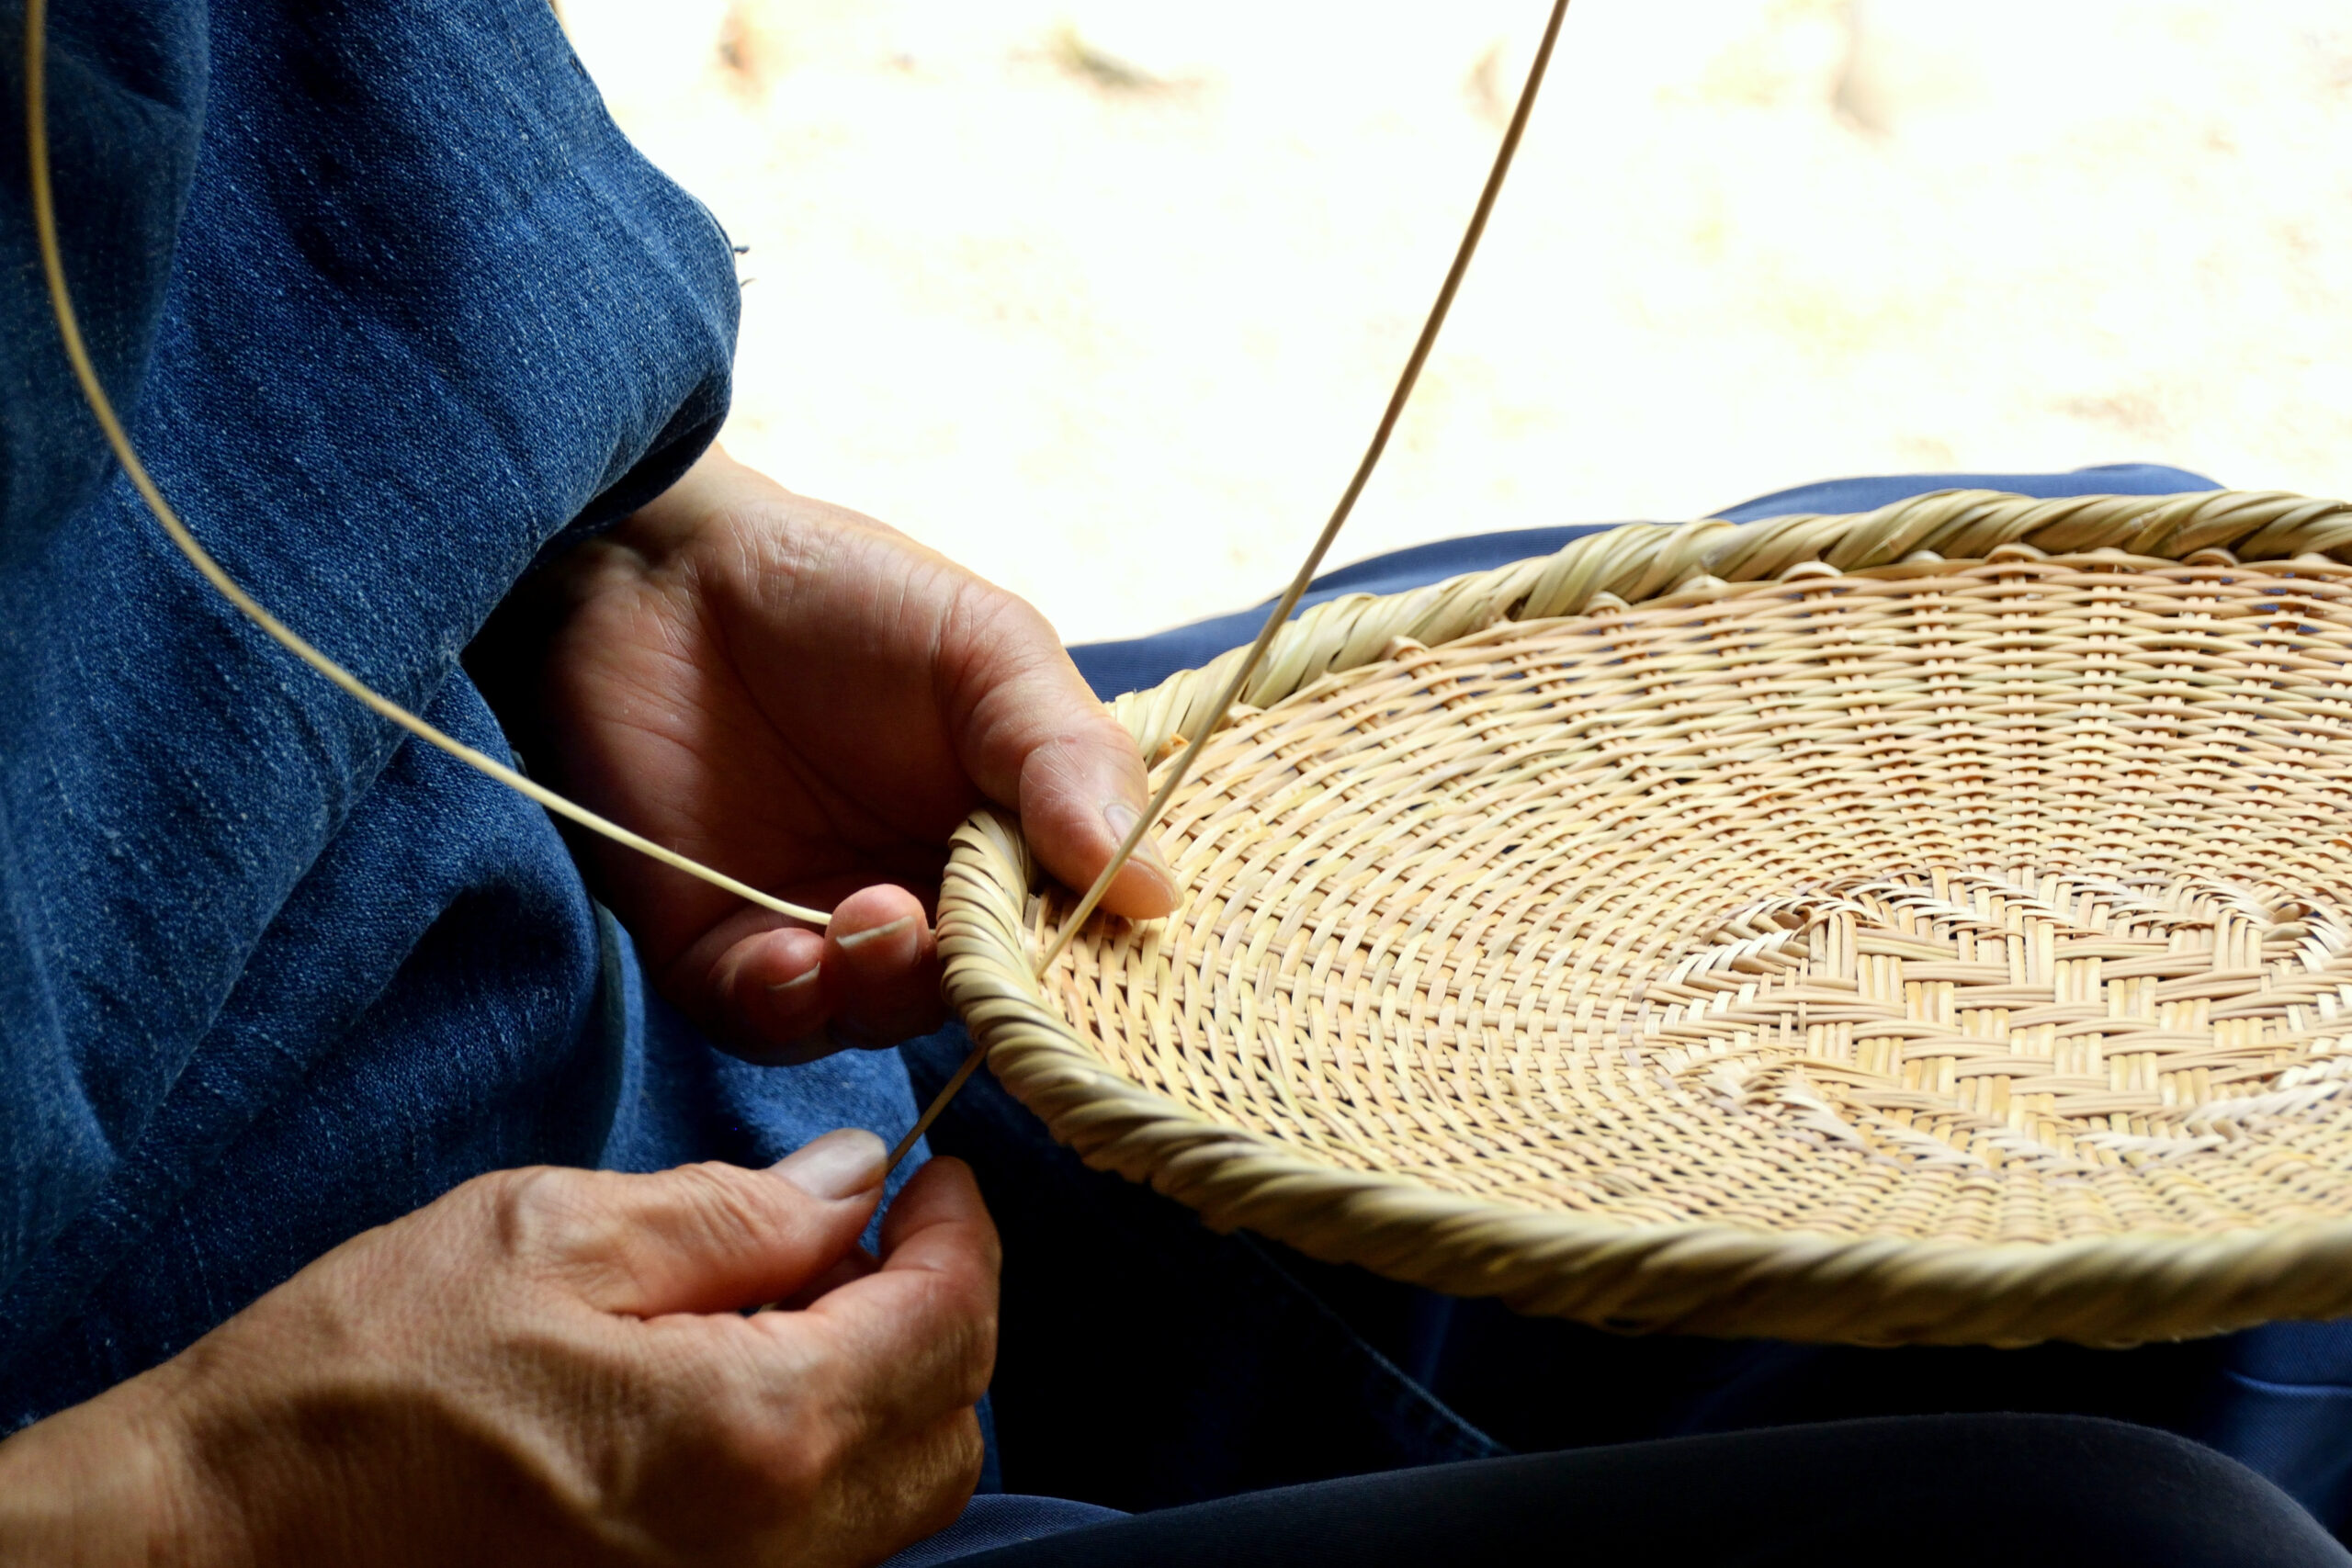 Bamboo craft